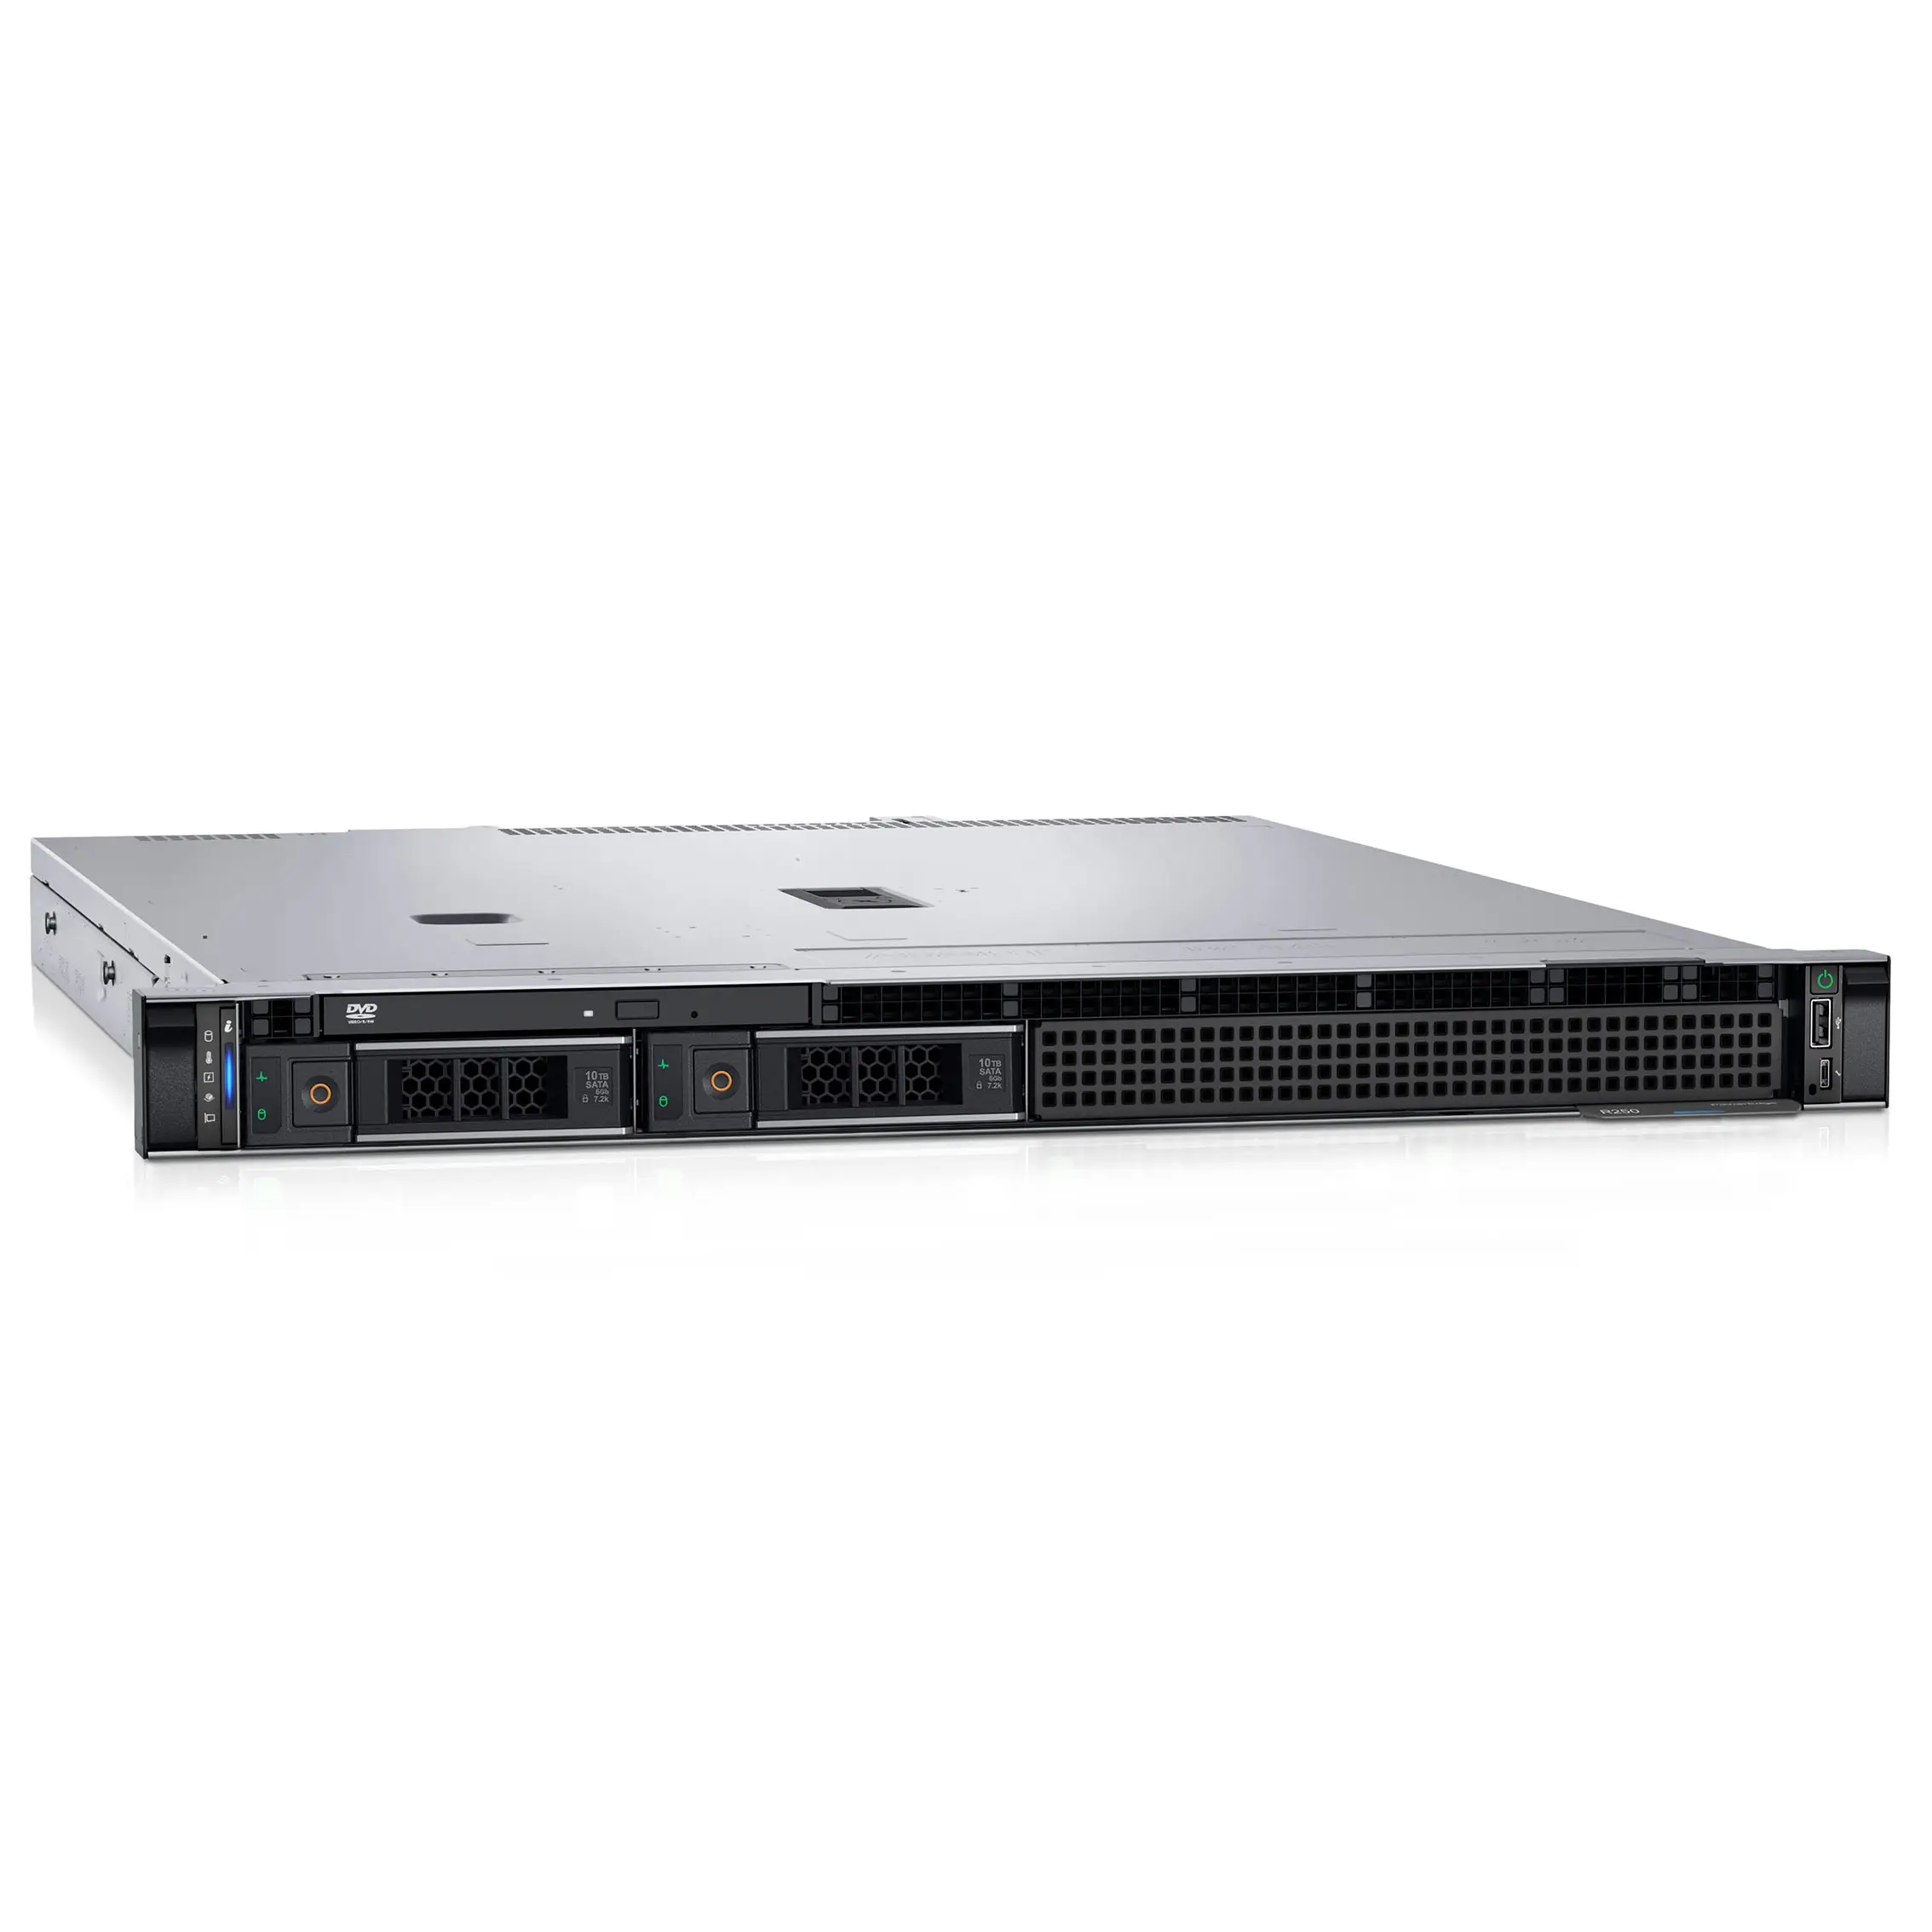 Hoge Kwaliteit R250 Dells Poweredge R250 Server 1u Cpu Intel Xeon E-2378G 2.8G 8c Processor Rack Server